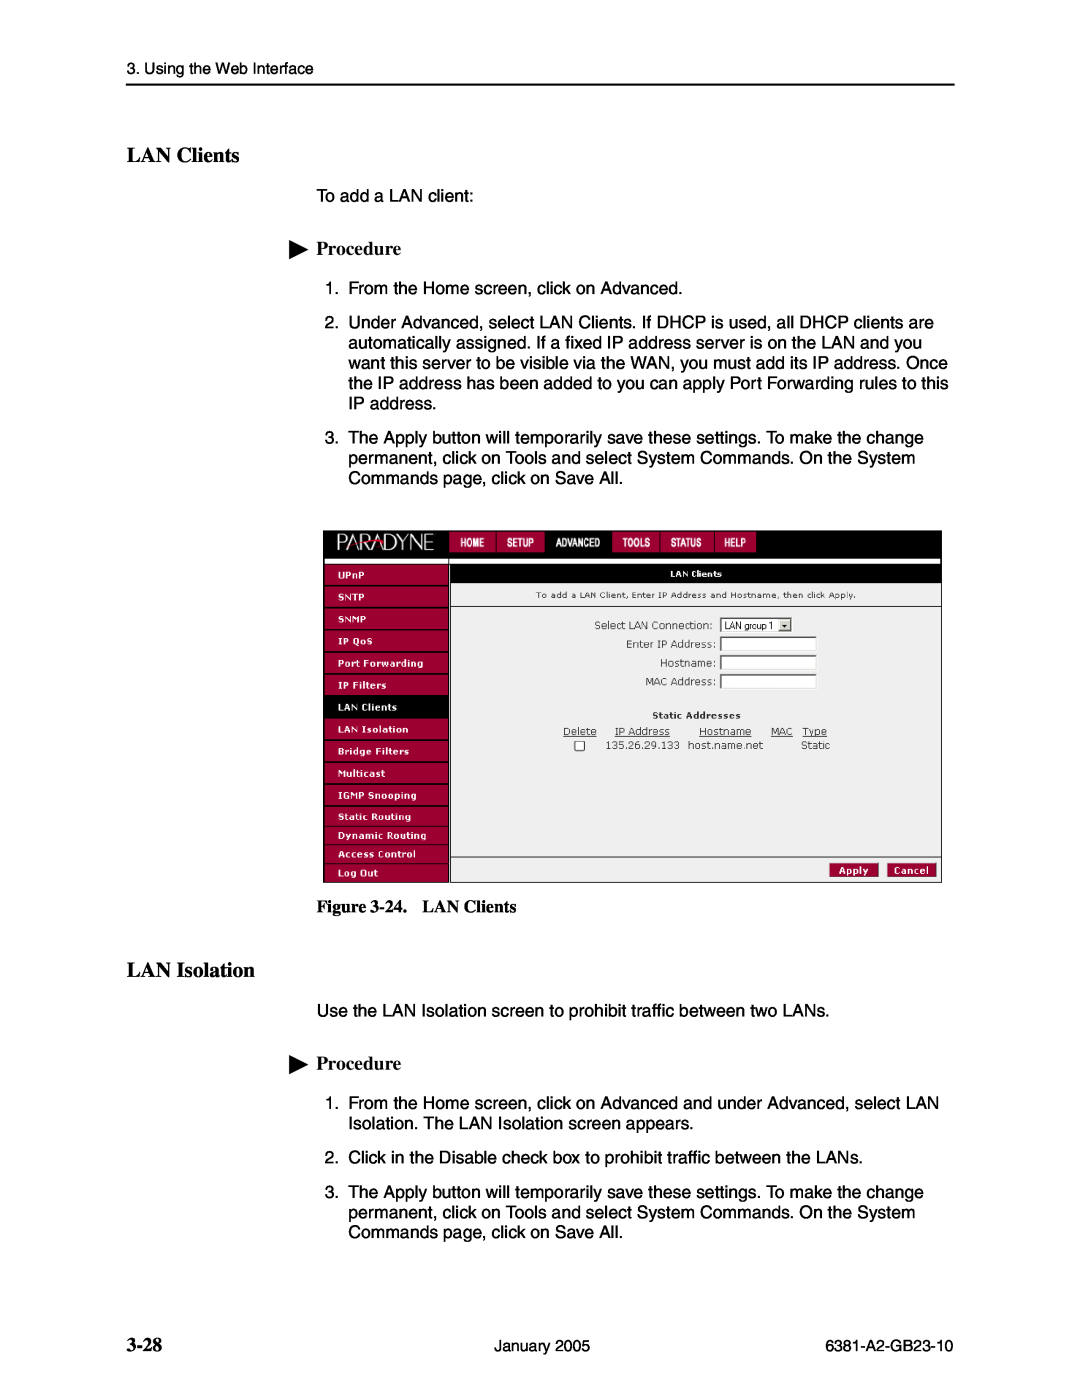 Paradyne 6381-A3 manual LAN Isolation, 3-28, 24. LAN Clients, Procedure 